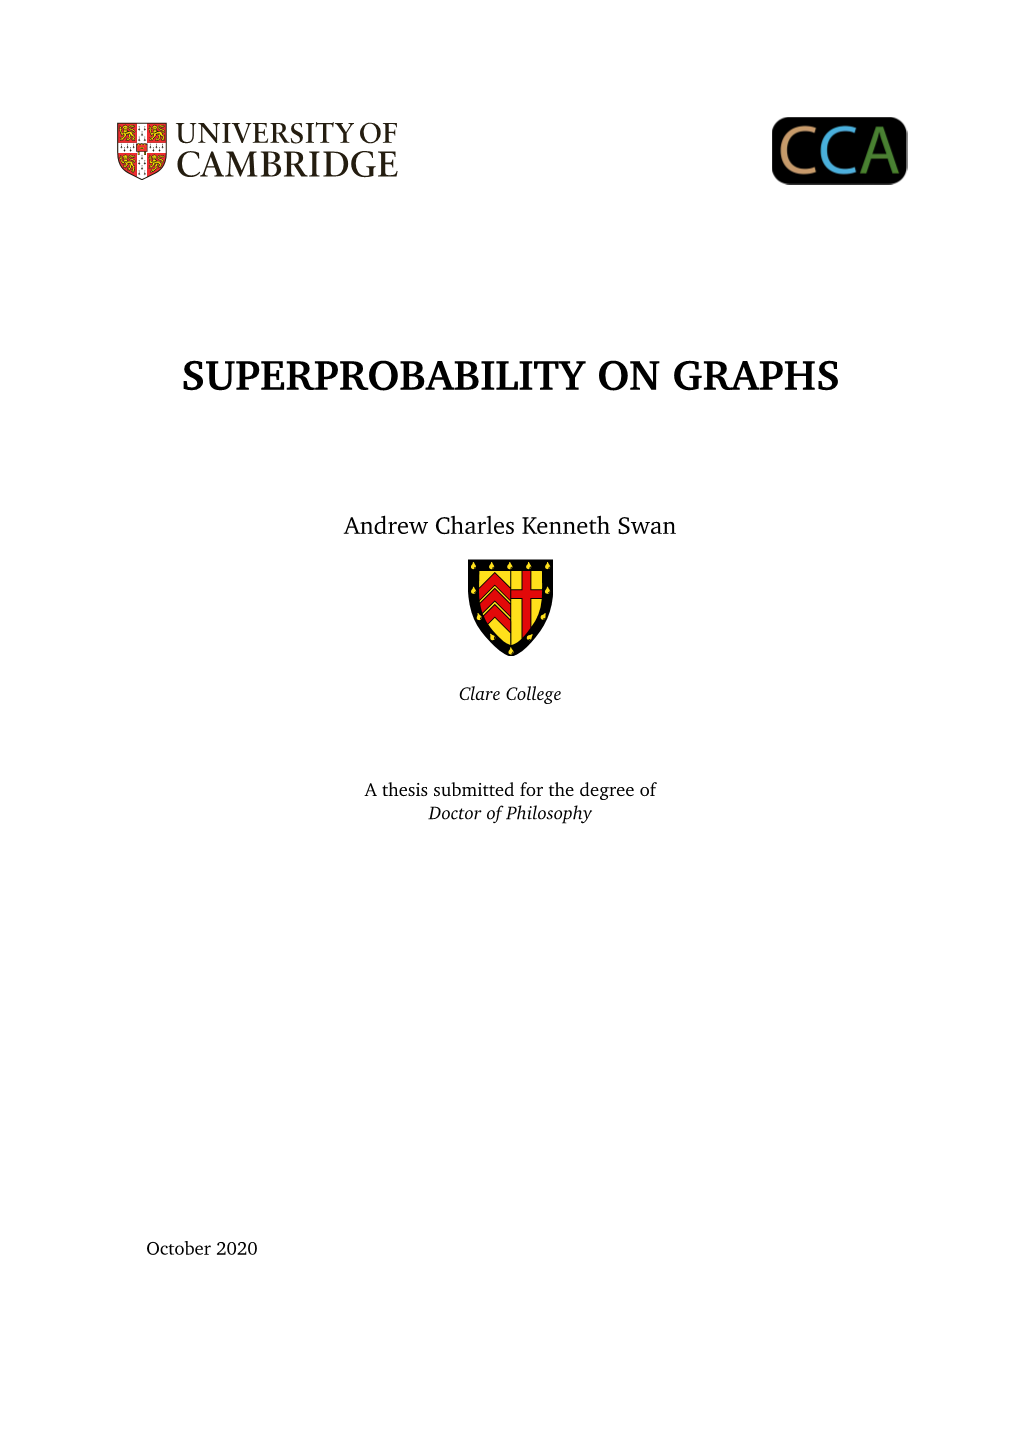 Superprobability on Graphs